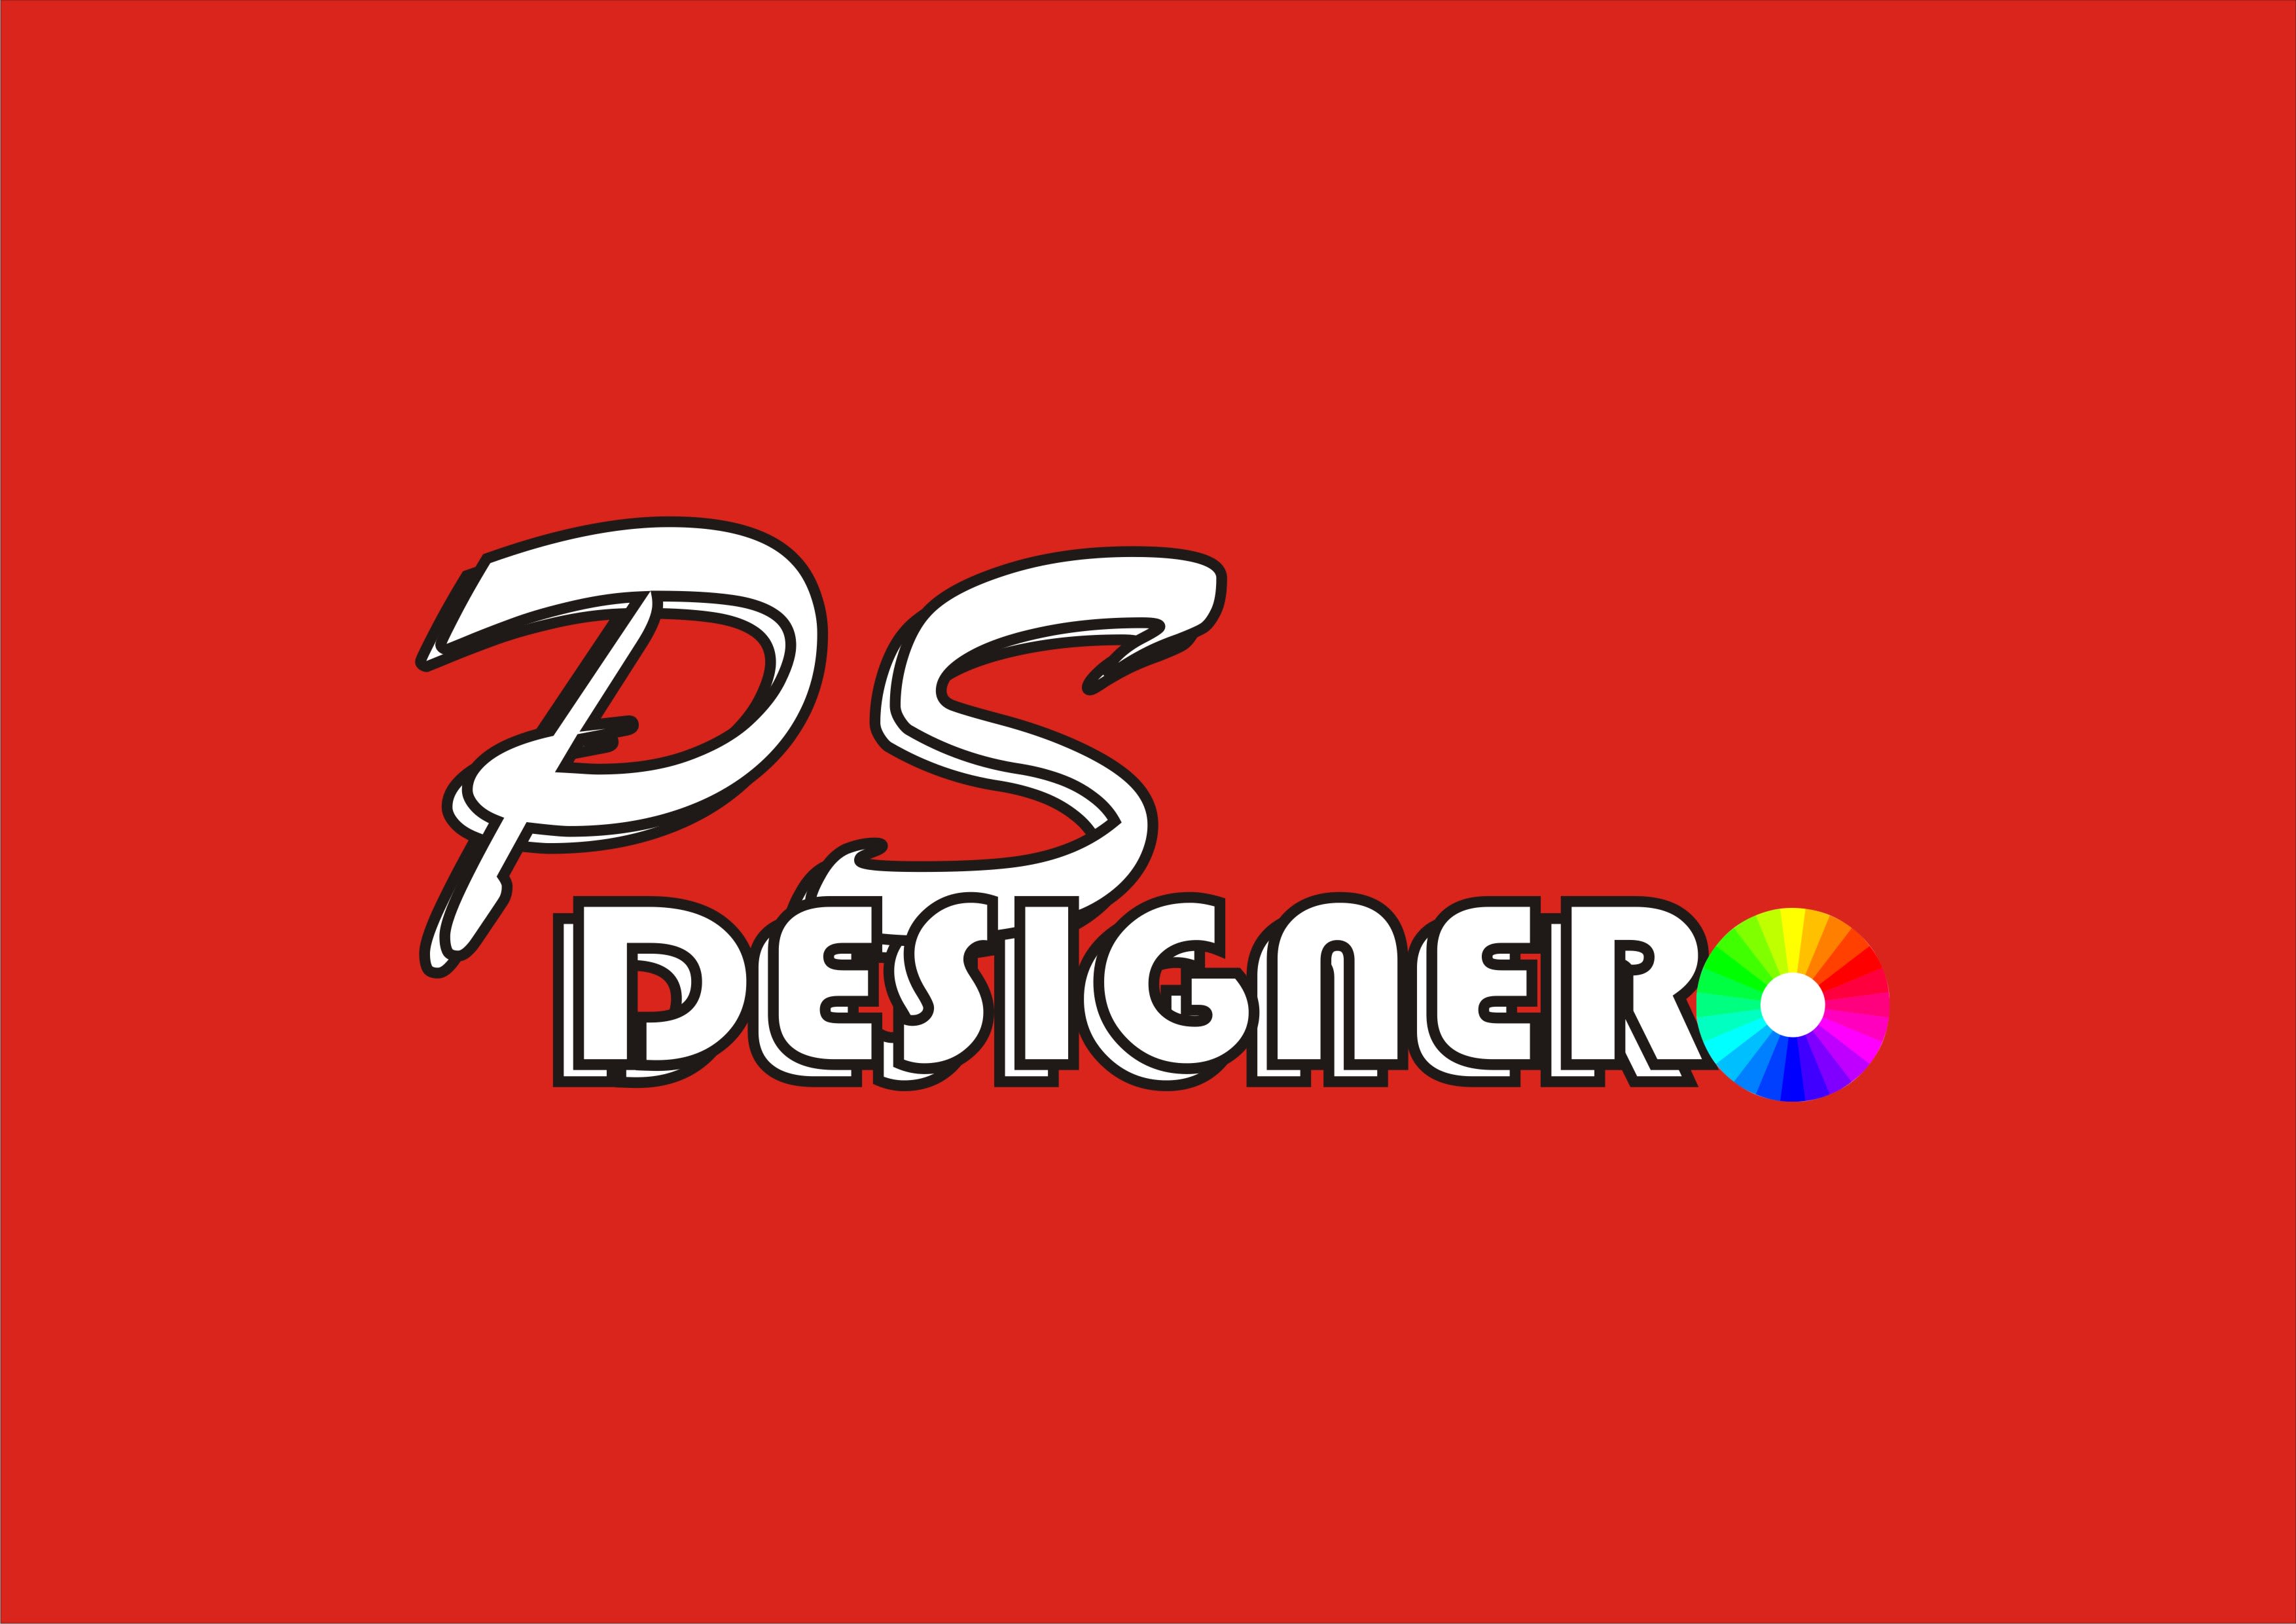 PS Designer